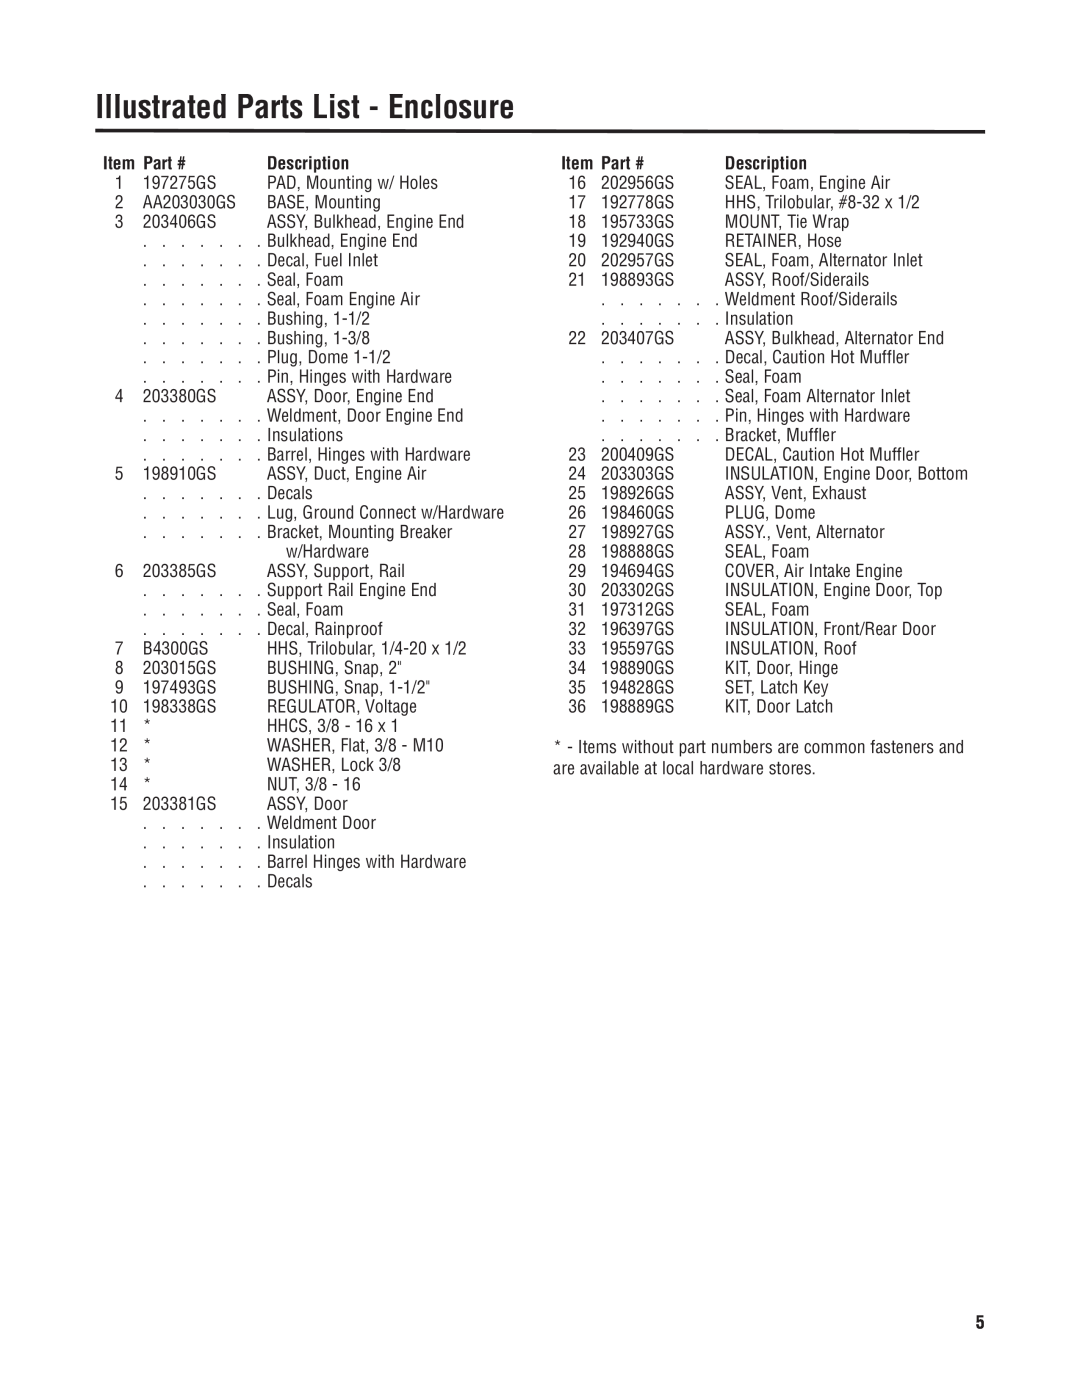 Briggs & Stratton 40276 manual Illustrated Parts List - Enclosure, Description 